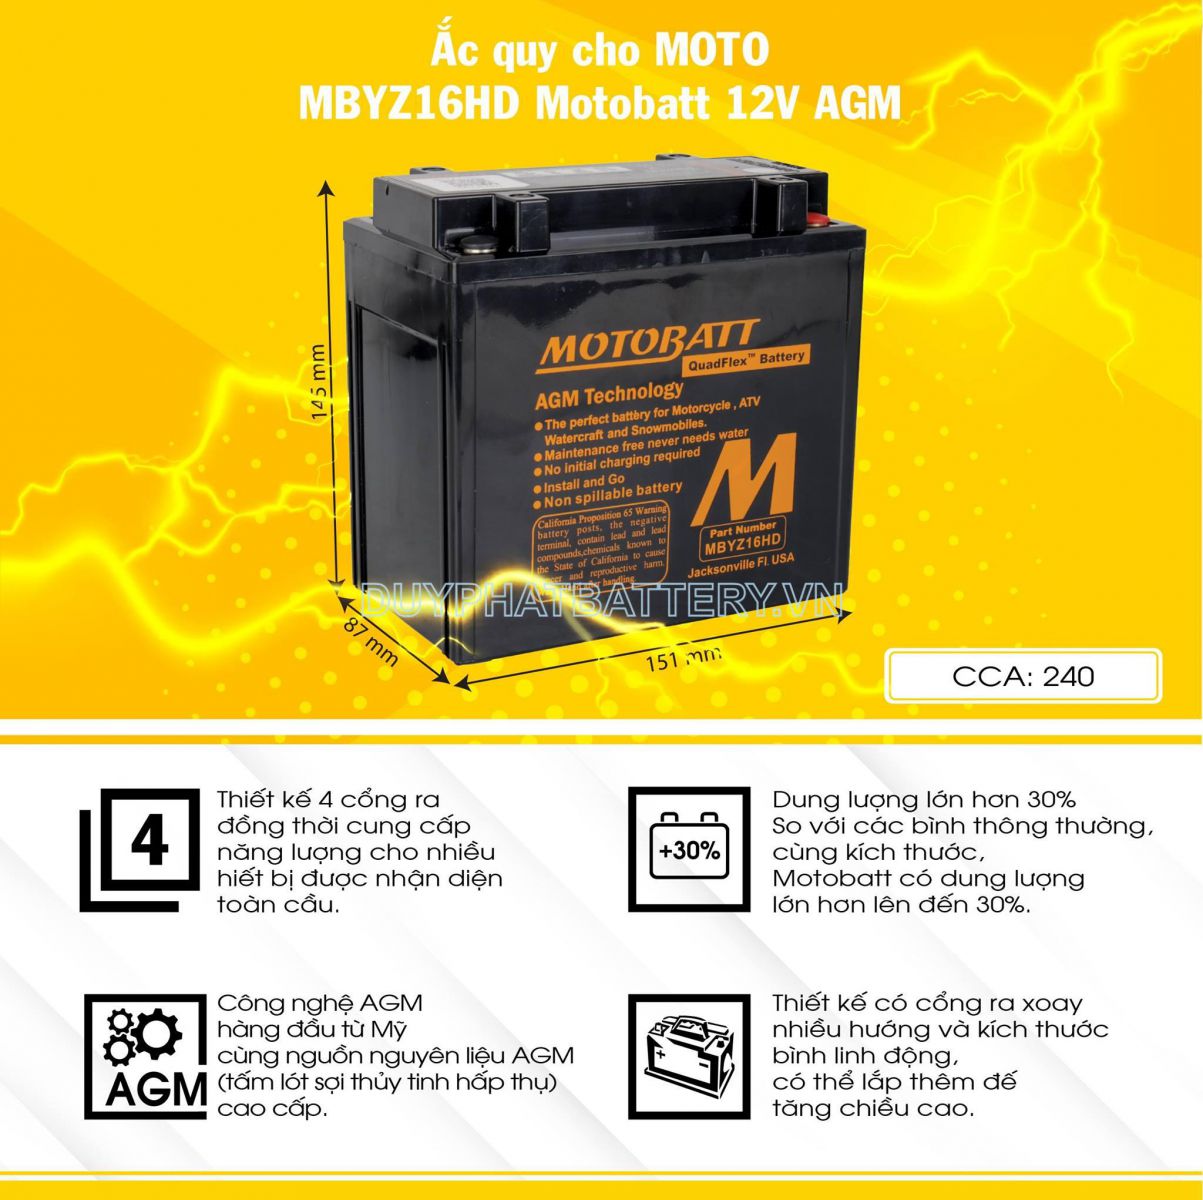  Motobatt Quadflex MBYZ16HD